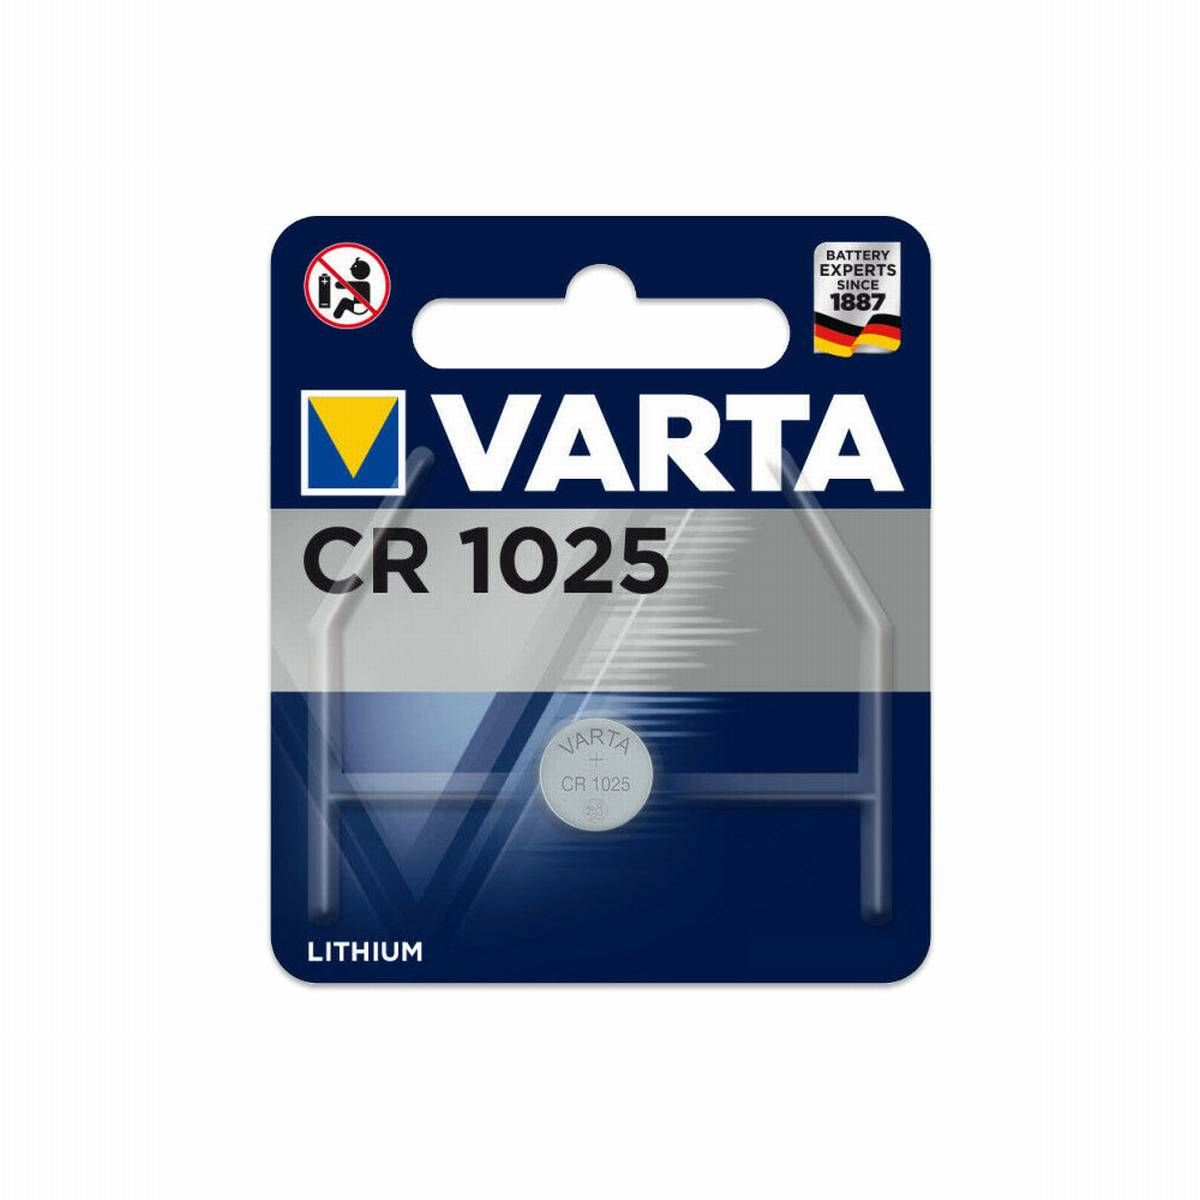 VARTA Electronics CR1025 Lithium 3V 3 Li-MnO2, (1er Knopfzelle Blister) Ah Knopfzelle, Volt, 0.025 Li-MnO2